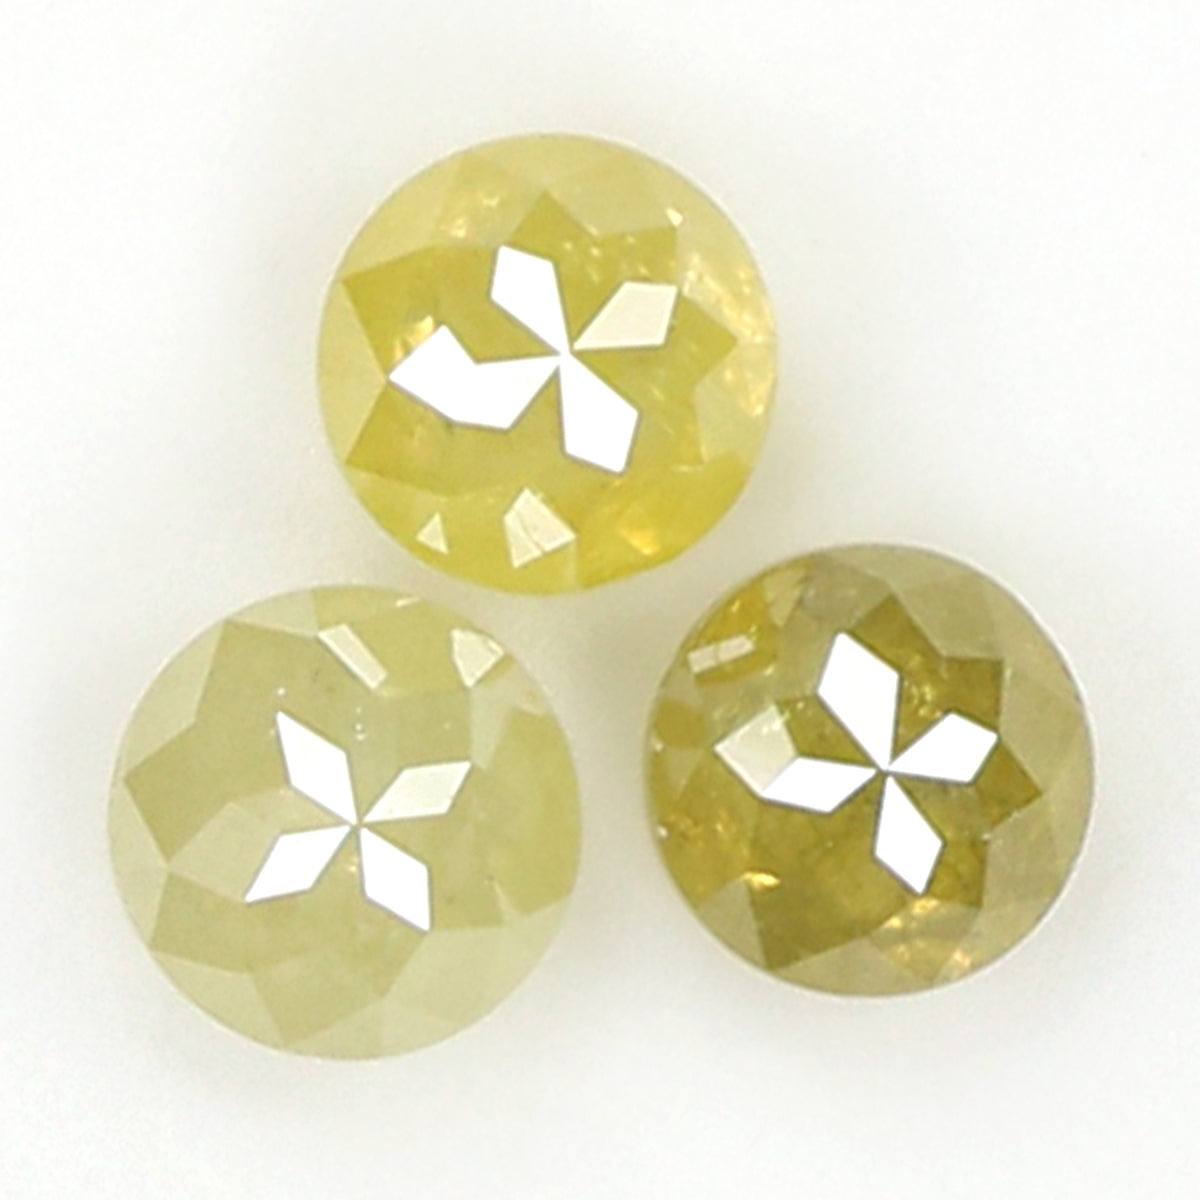 0.67 CT Natural Loose Rose Cut Diamond Yellow Color Round Cut Diamond 3.30 MM Natural Loose Diamond Round Rose Cut Shape Diamond LQ6333